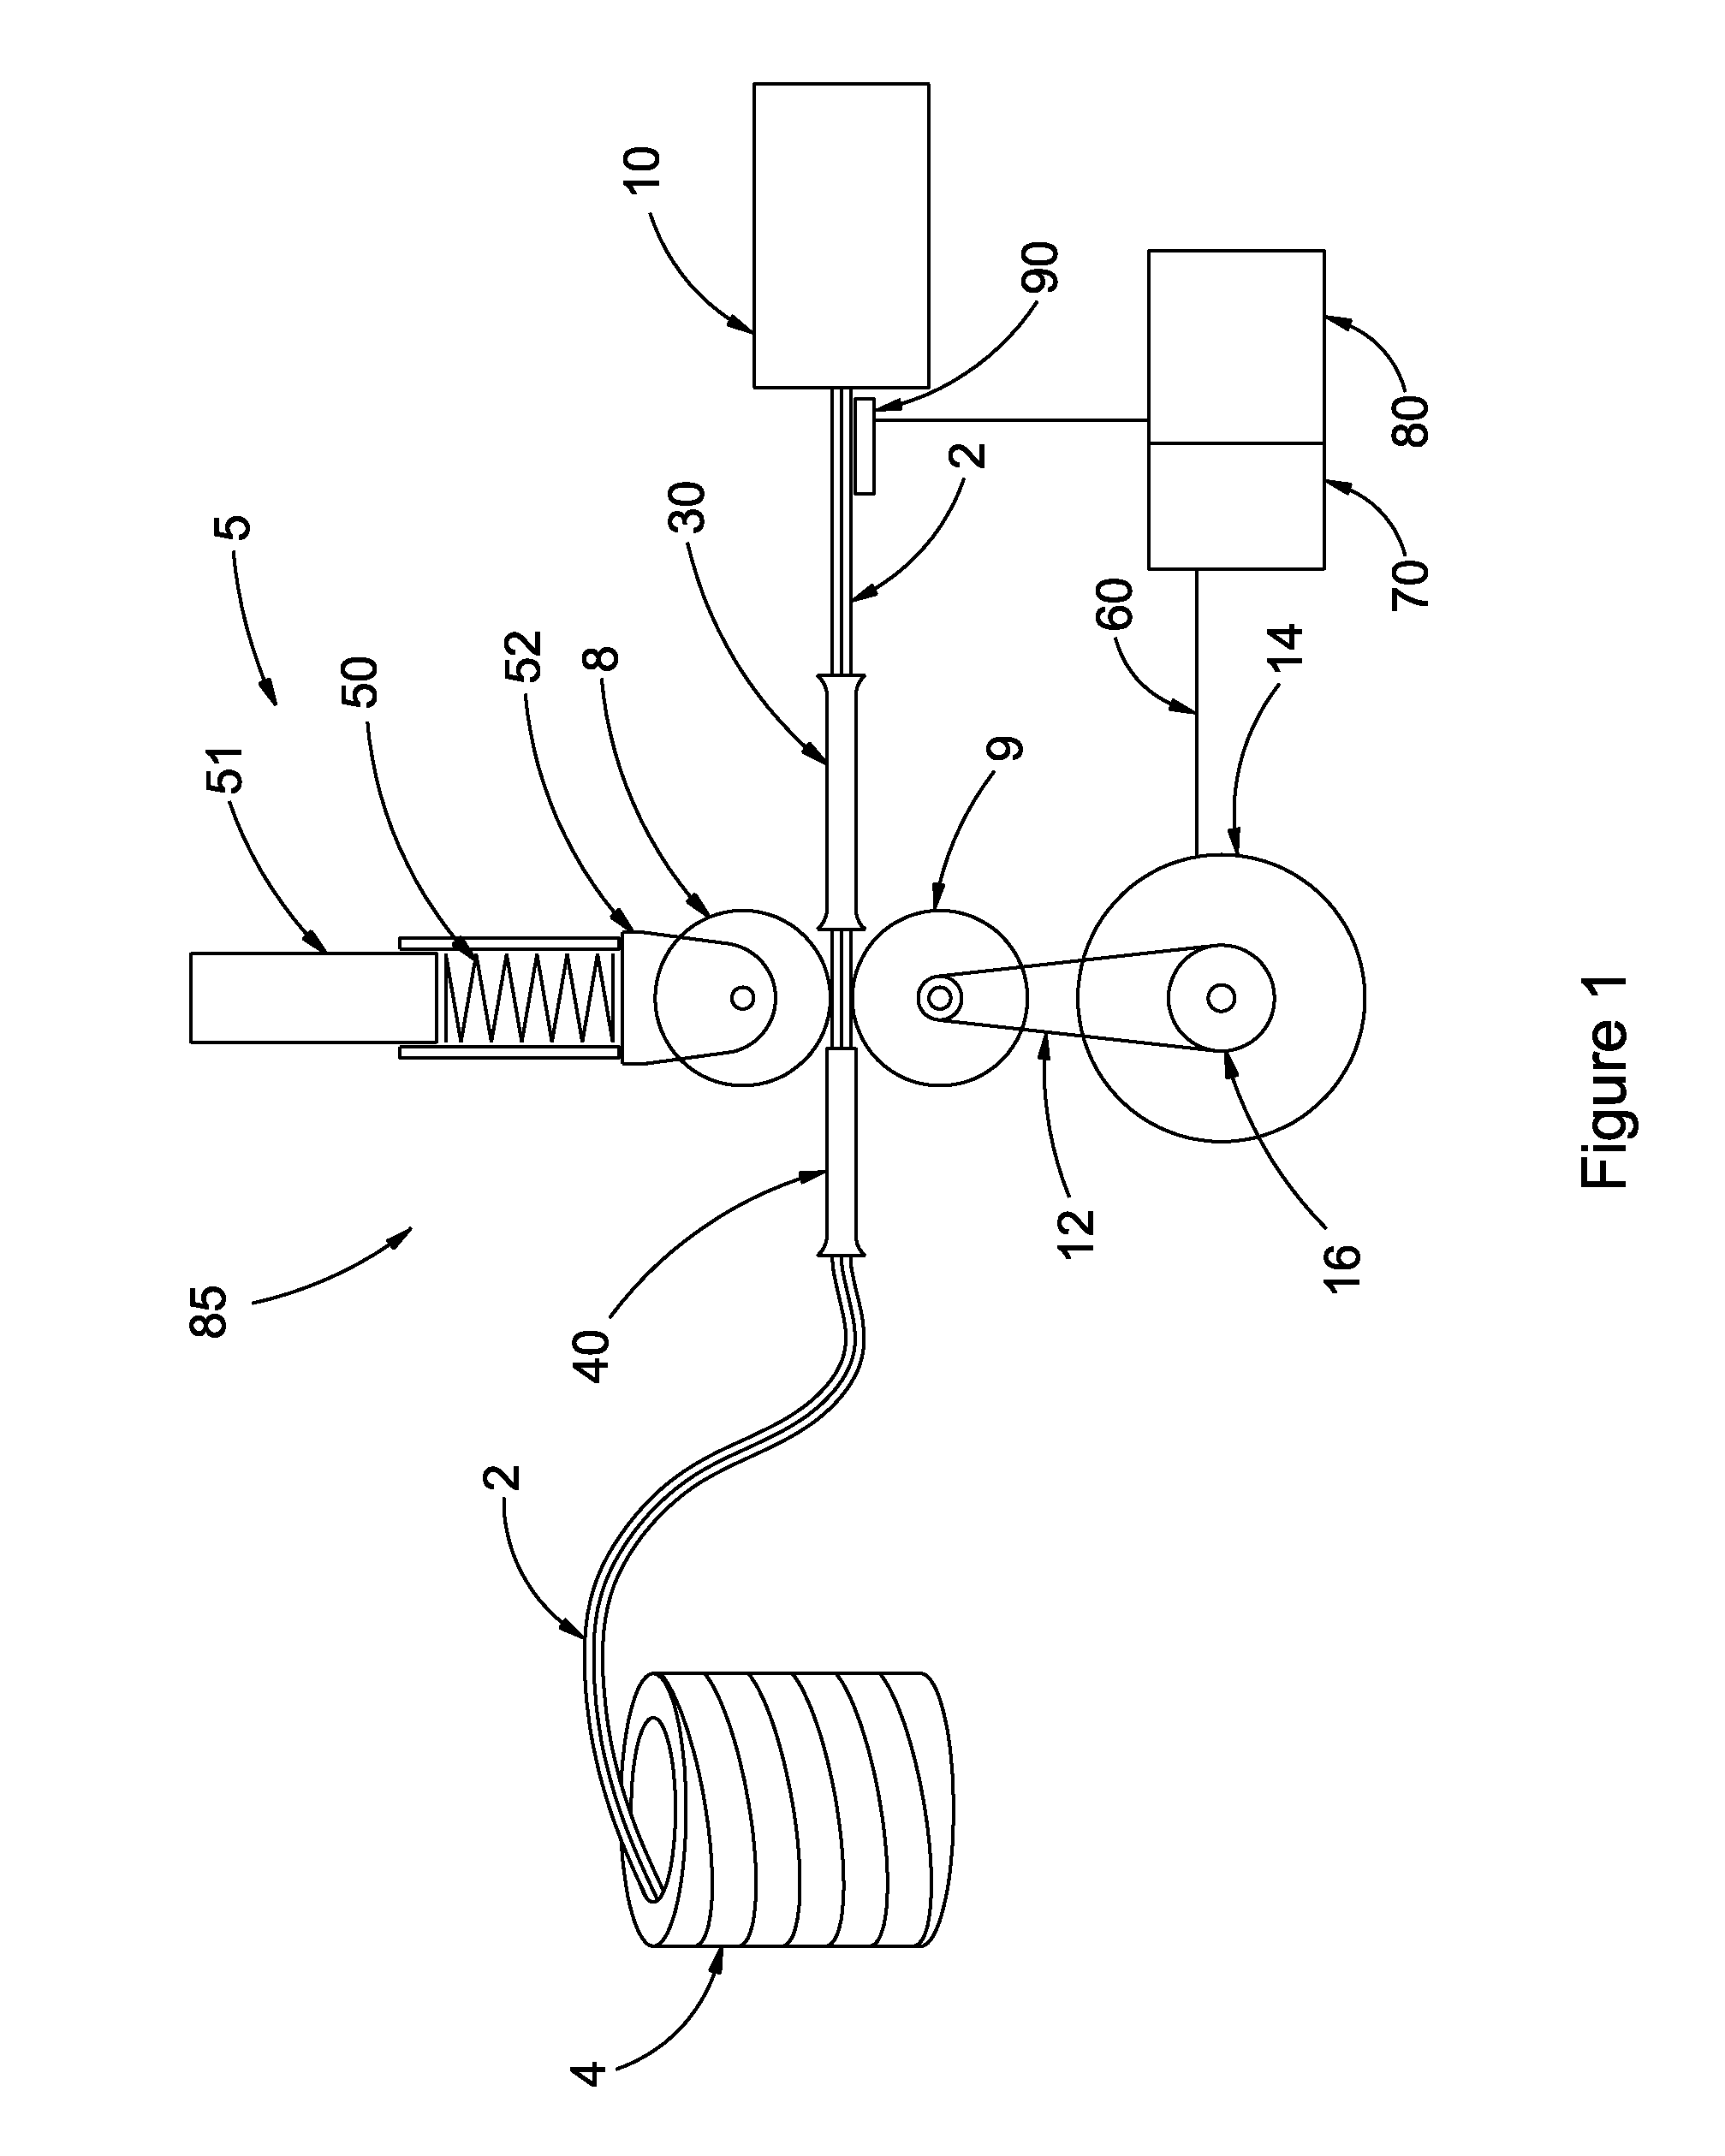 Computer numerical control of fiber tension in fiber processing